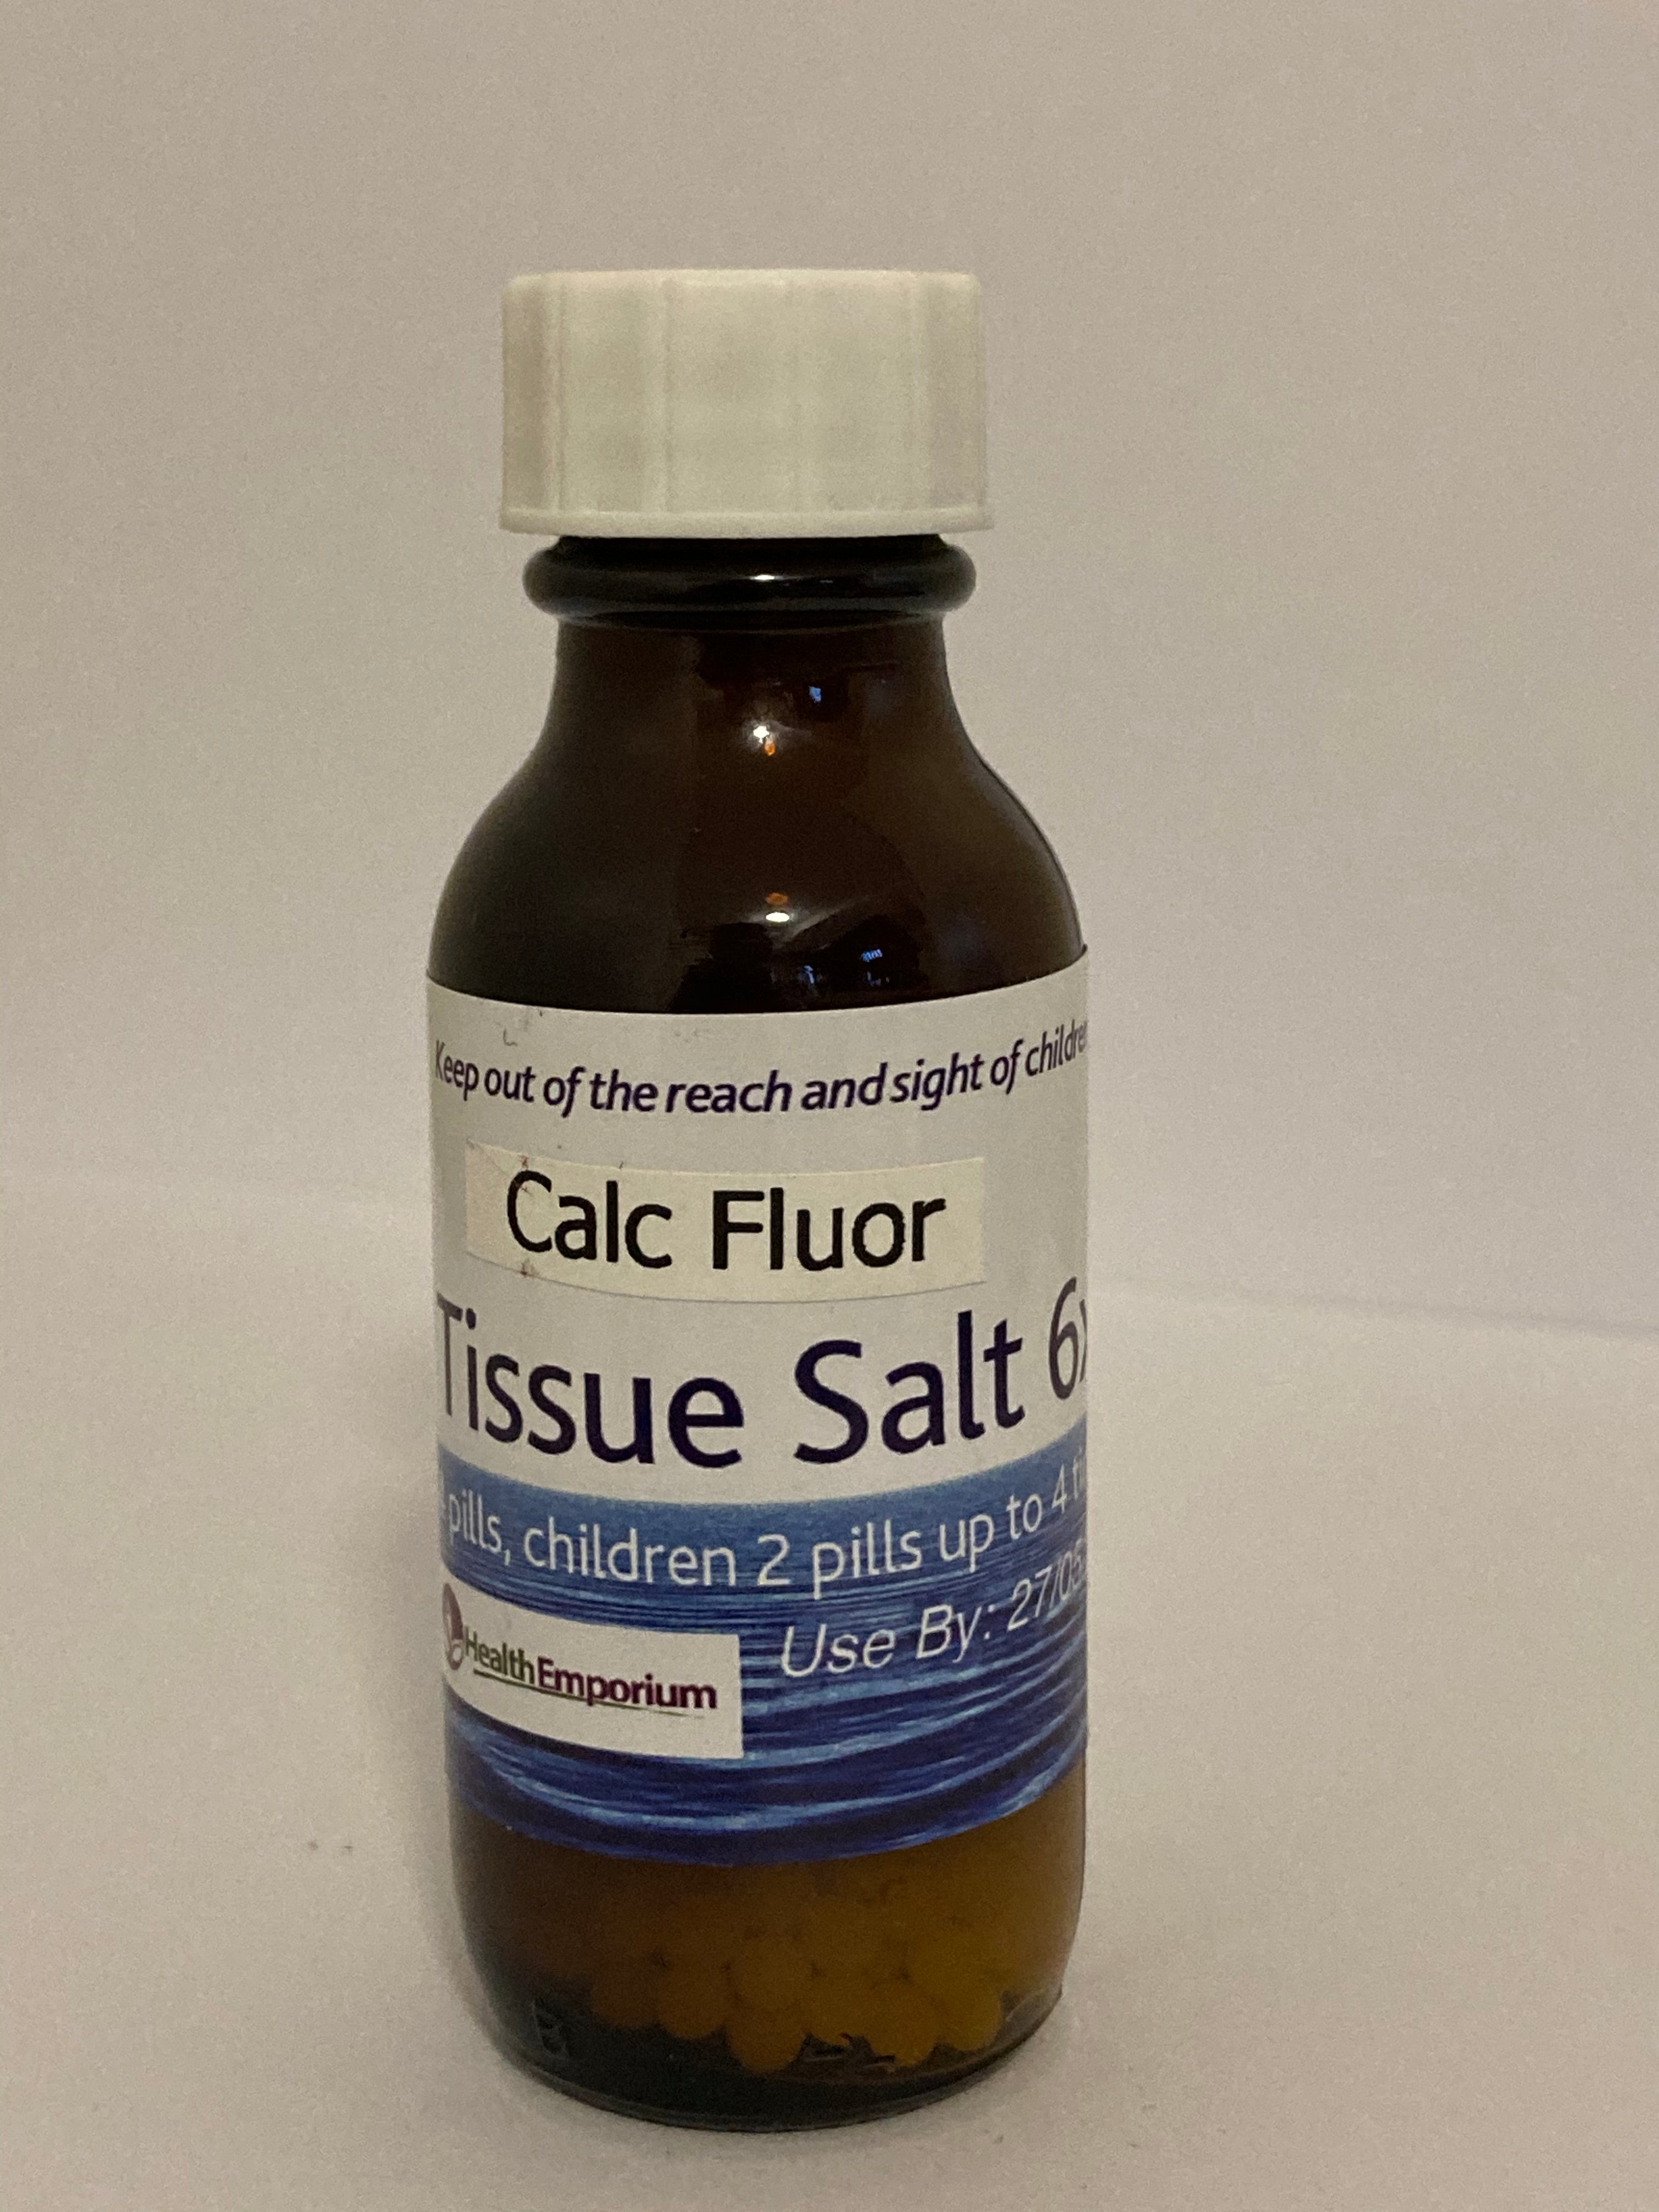 Calc fluor no 1 garam tisu lembut